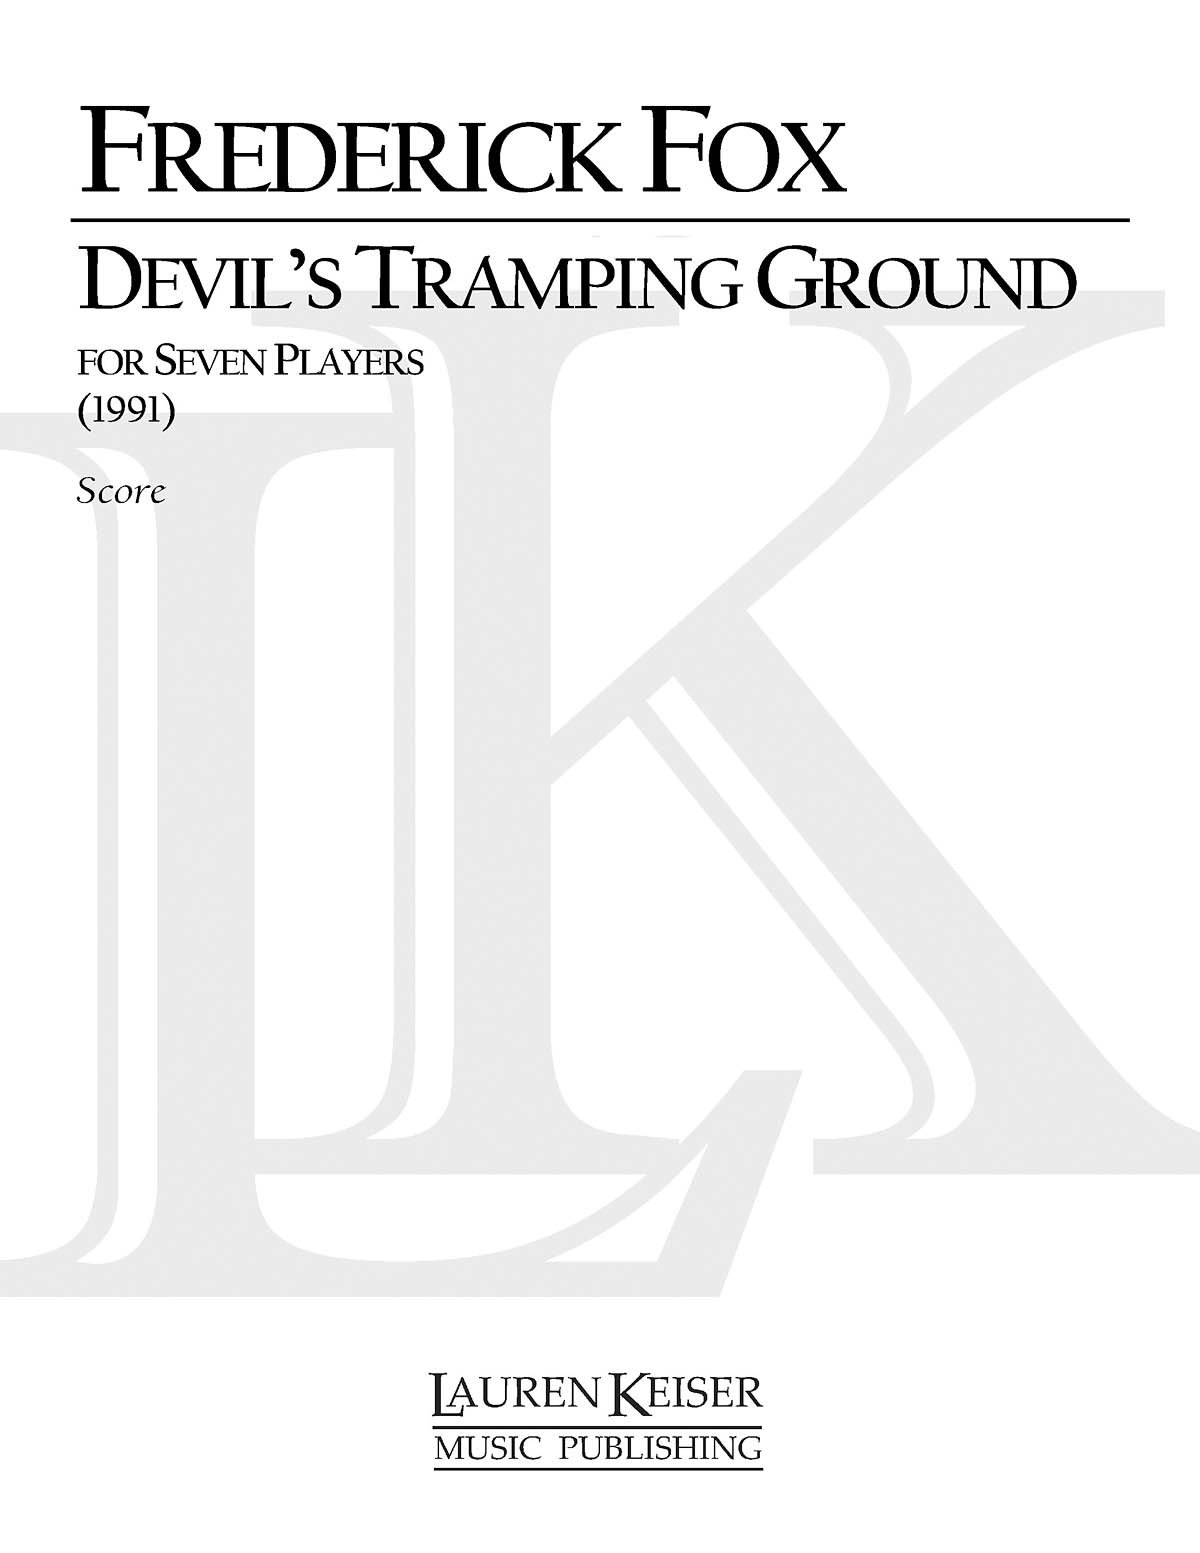 Devil's Tramping Ground